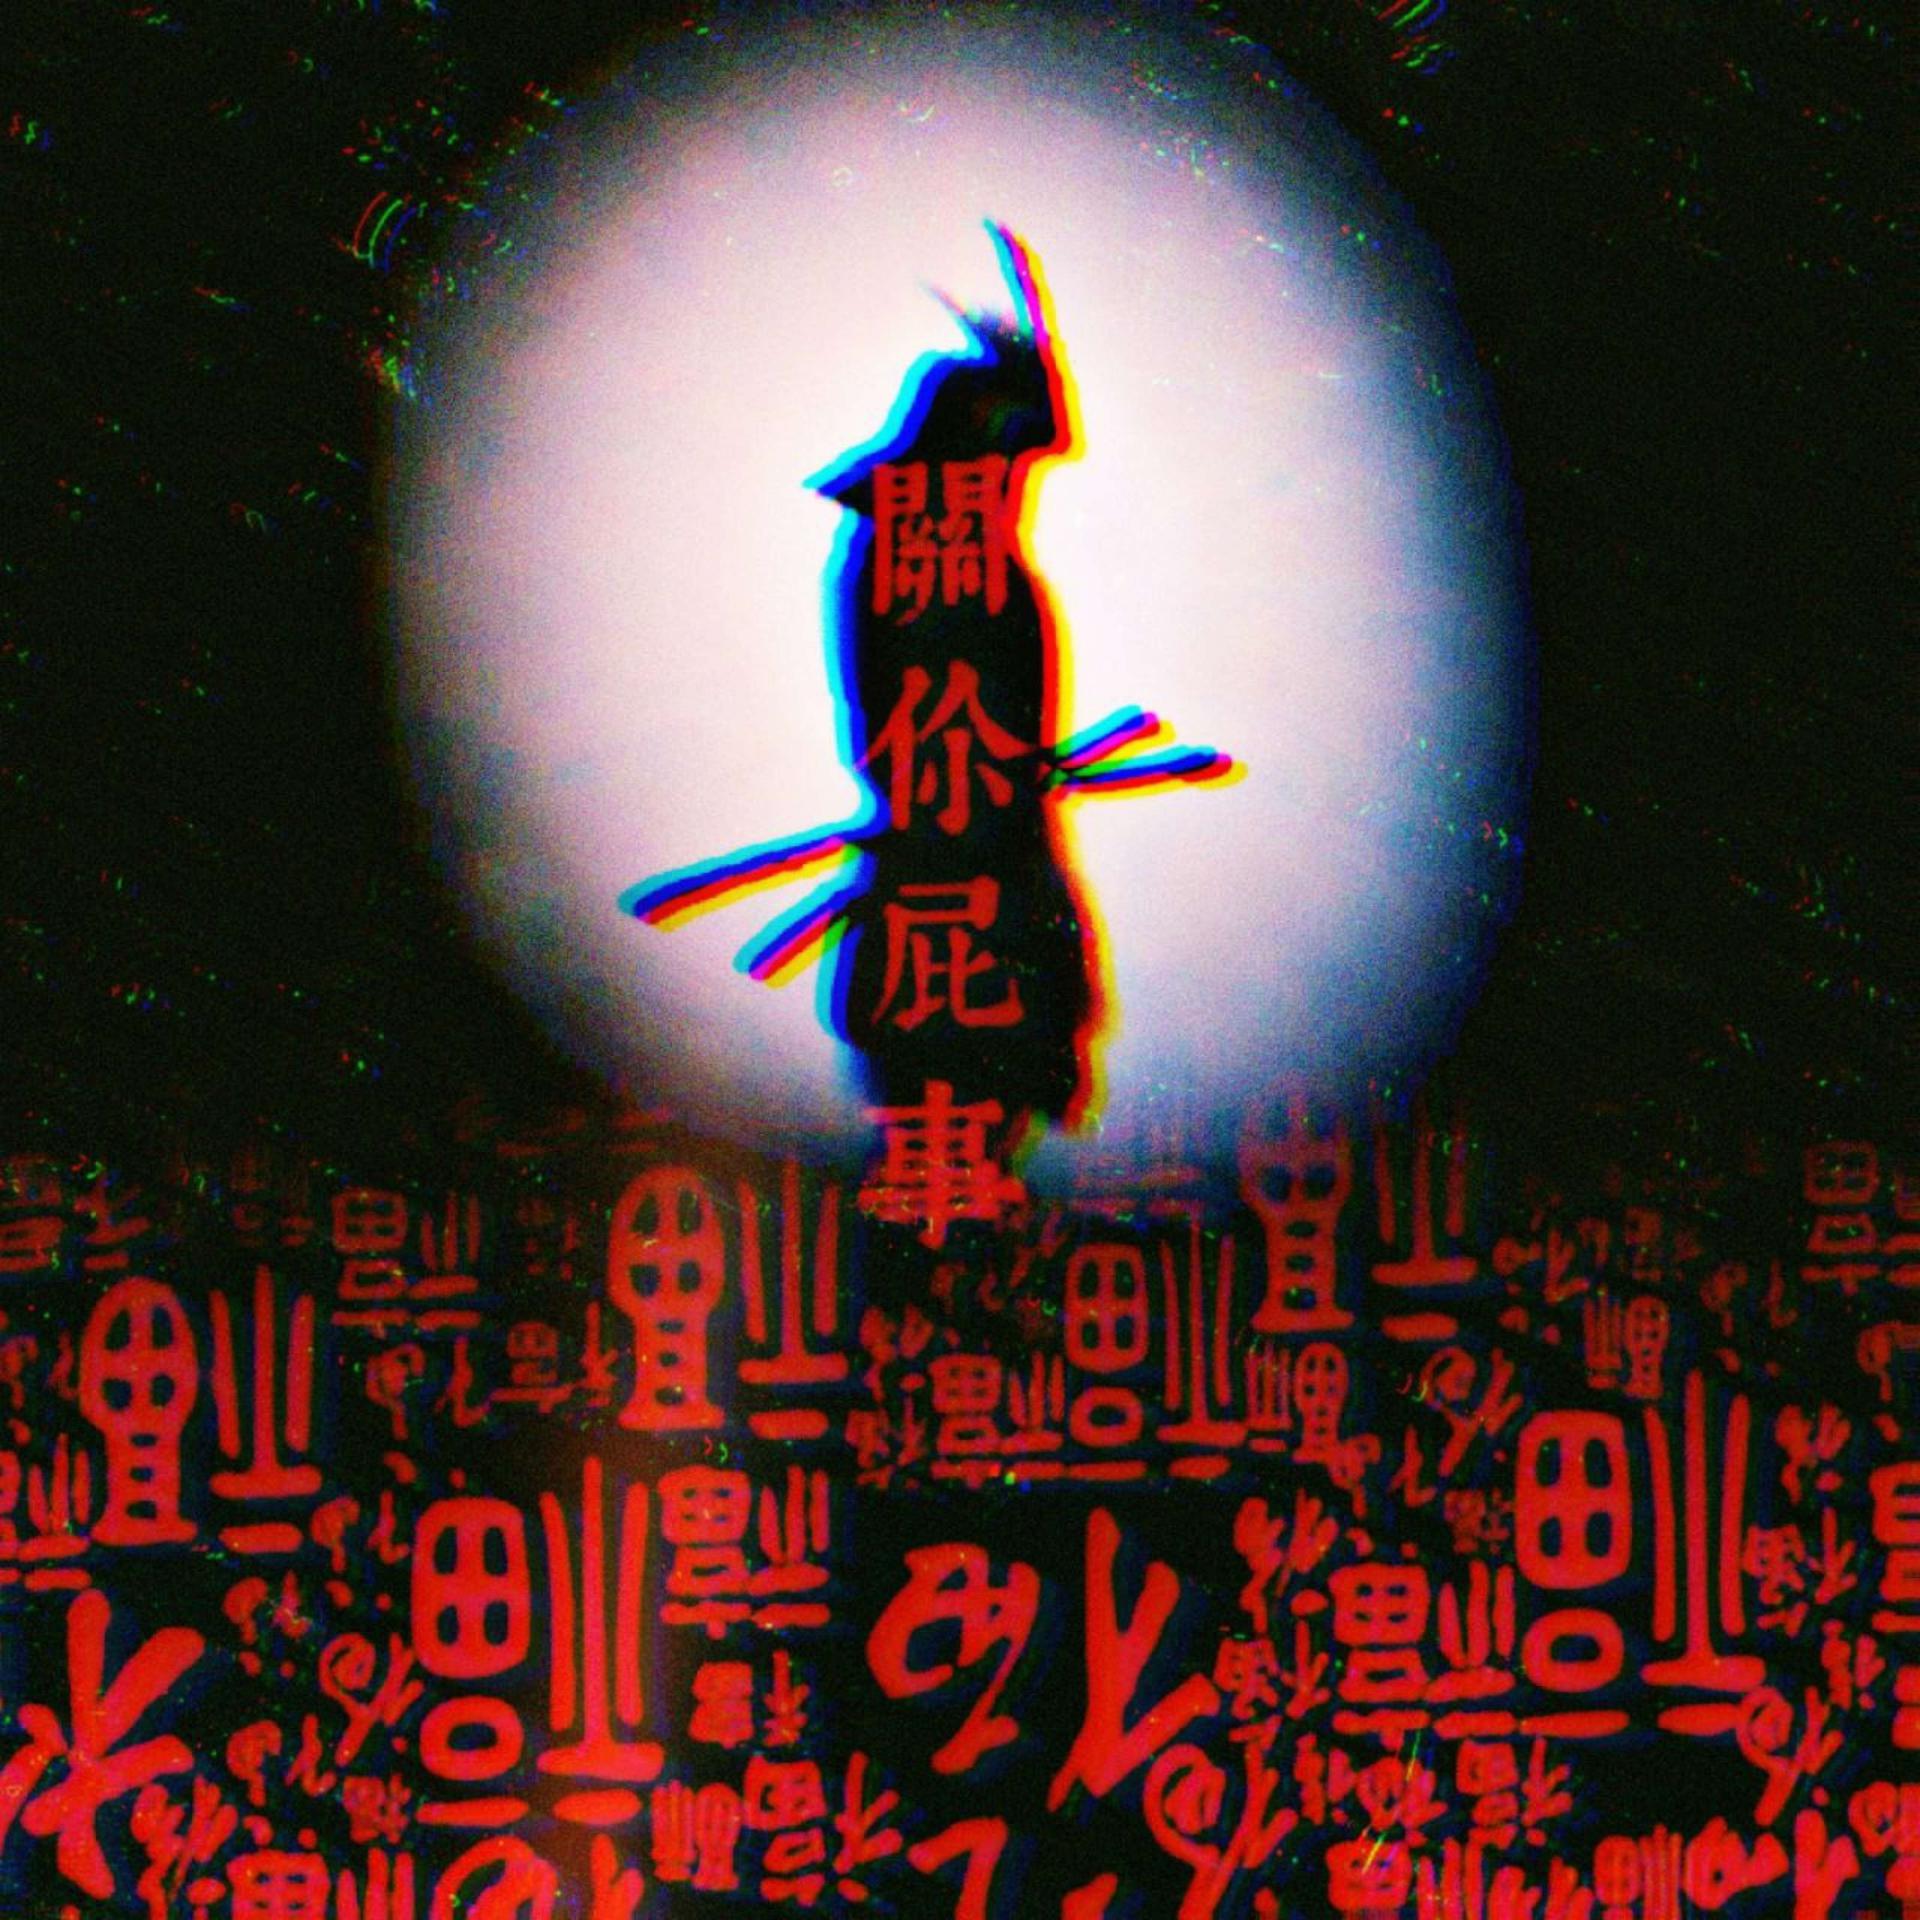 Постер альбома Samurai Phonk